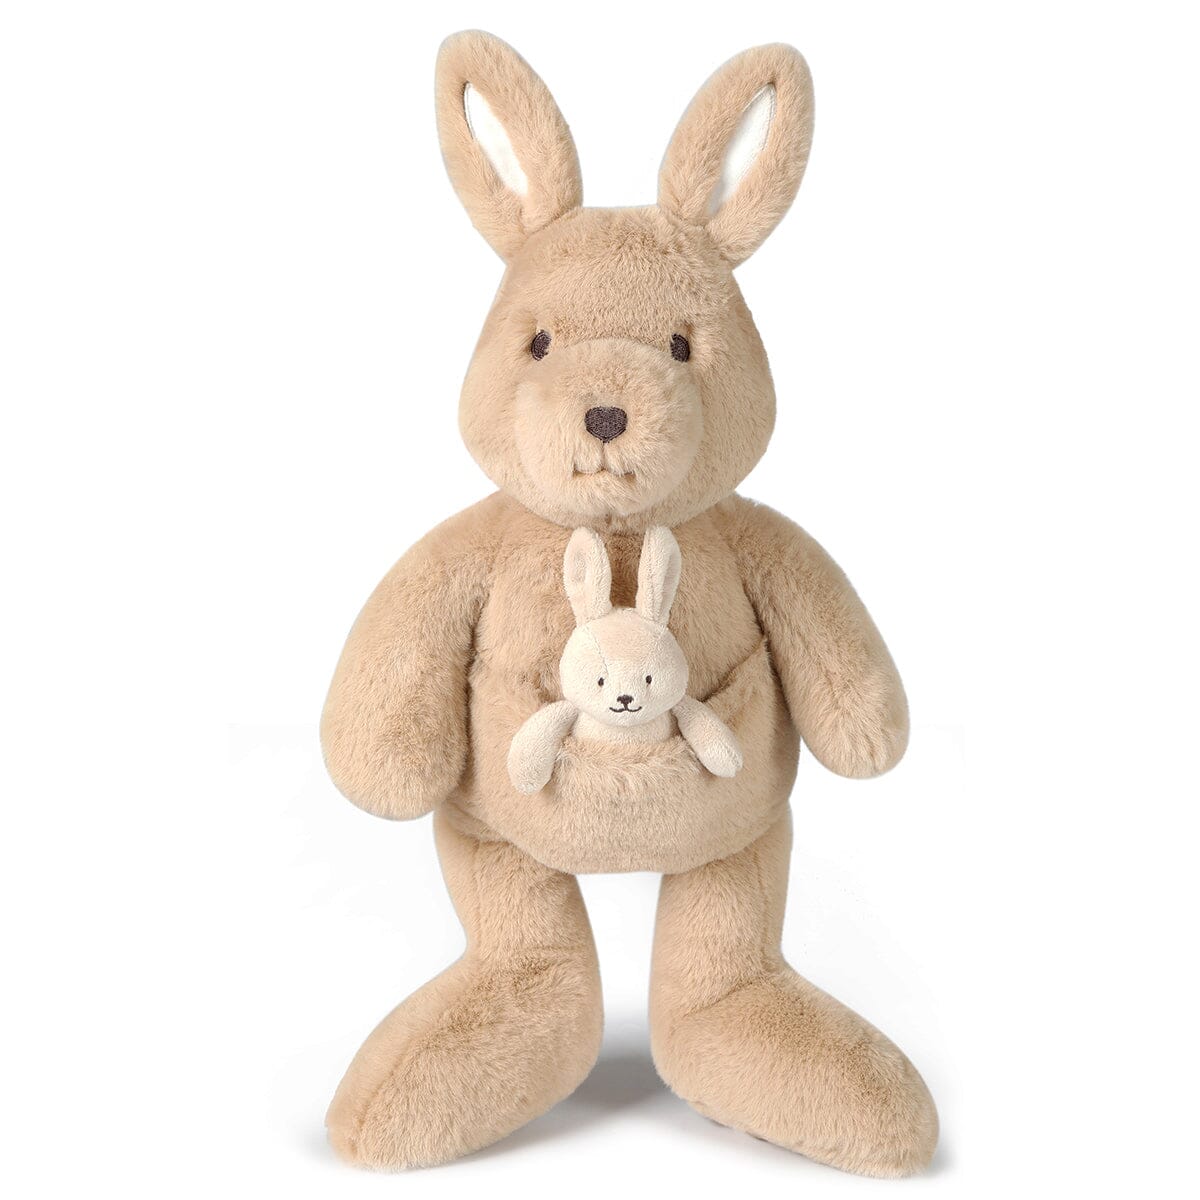 OB Design - Kip & Baby Joey Kangaroo soft toy